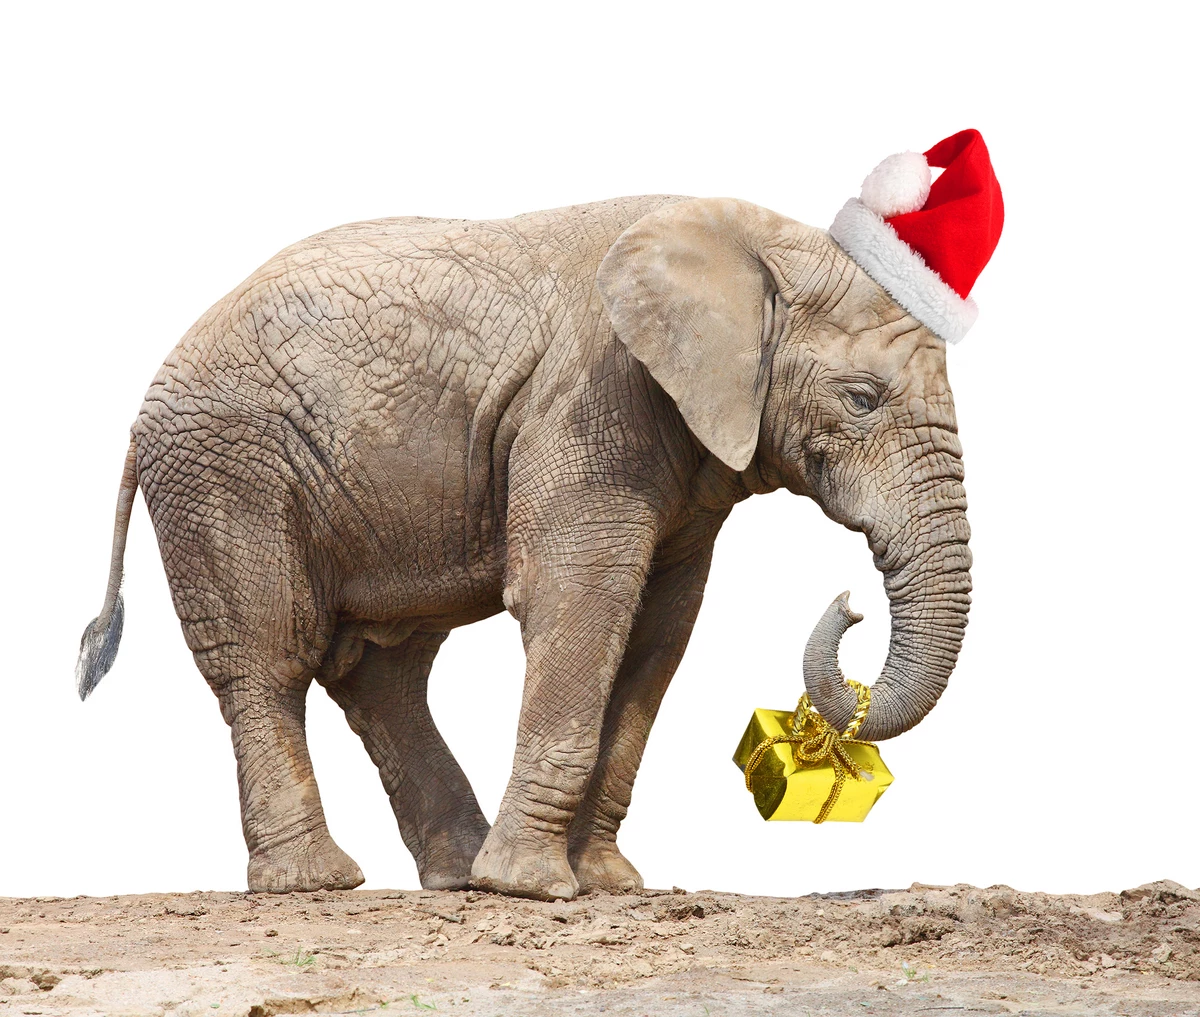 white elephant gift ideas - The Soltrop Six  White elephant gifts, Best white  elephant gifts, Christmas white elephant